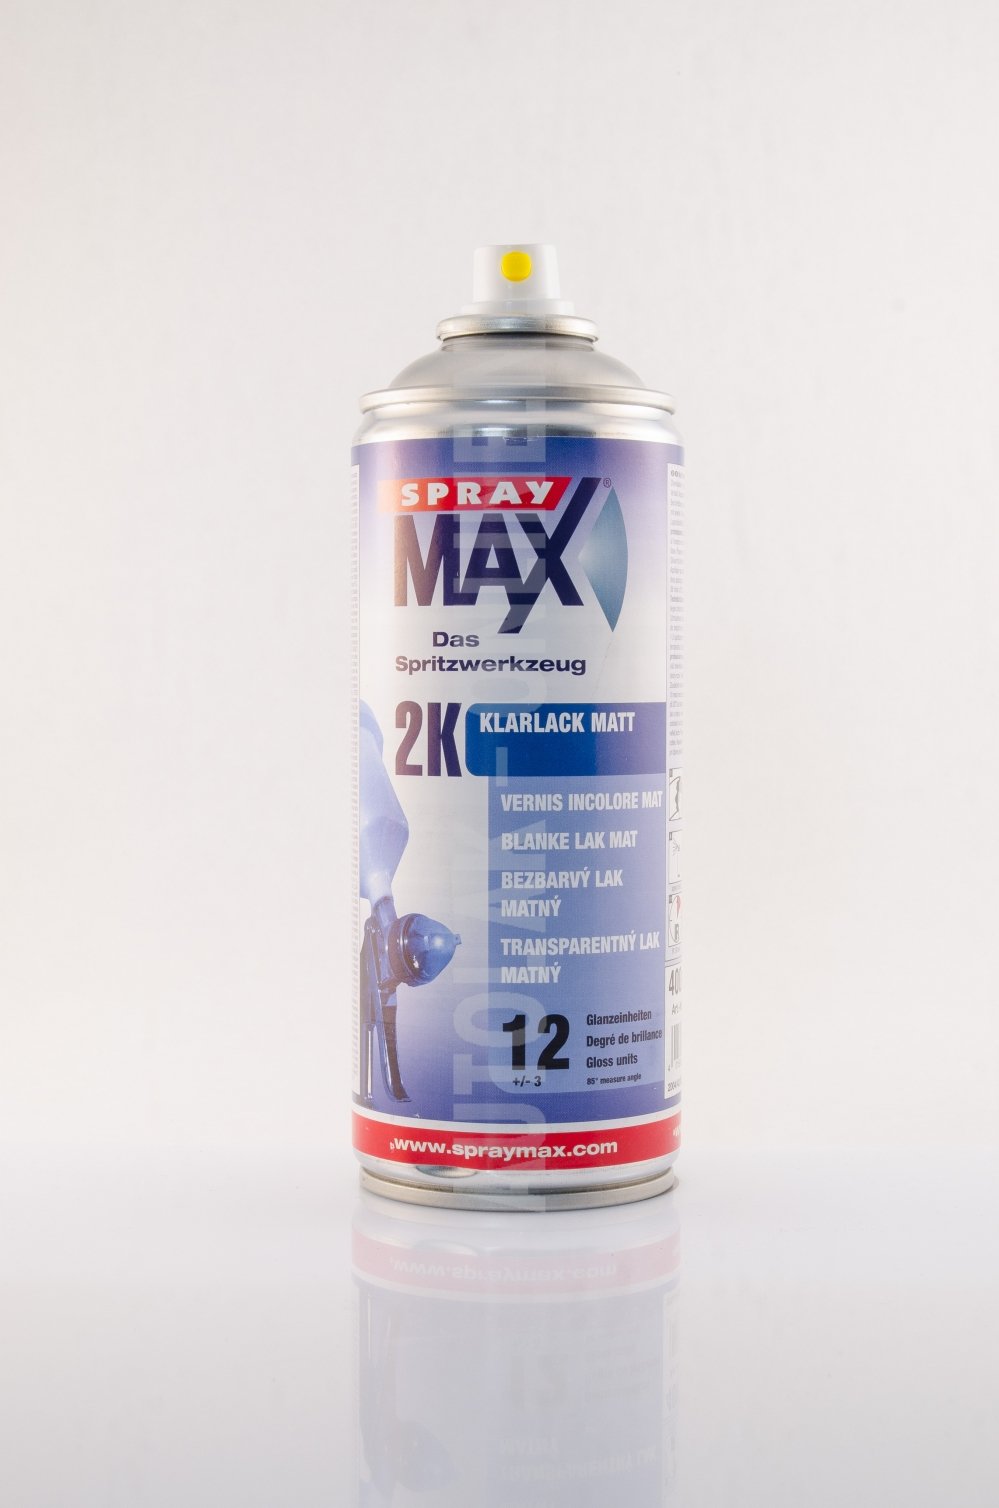 Blanke lak - Spraymax-2K-blanke-lak-mat-autolak-online